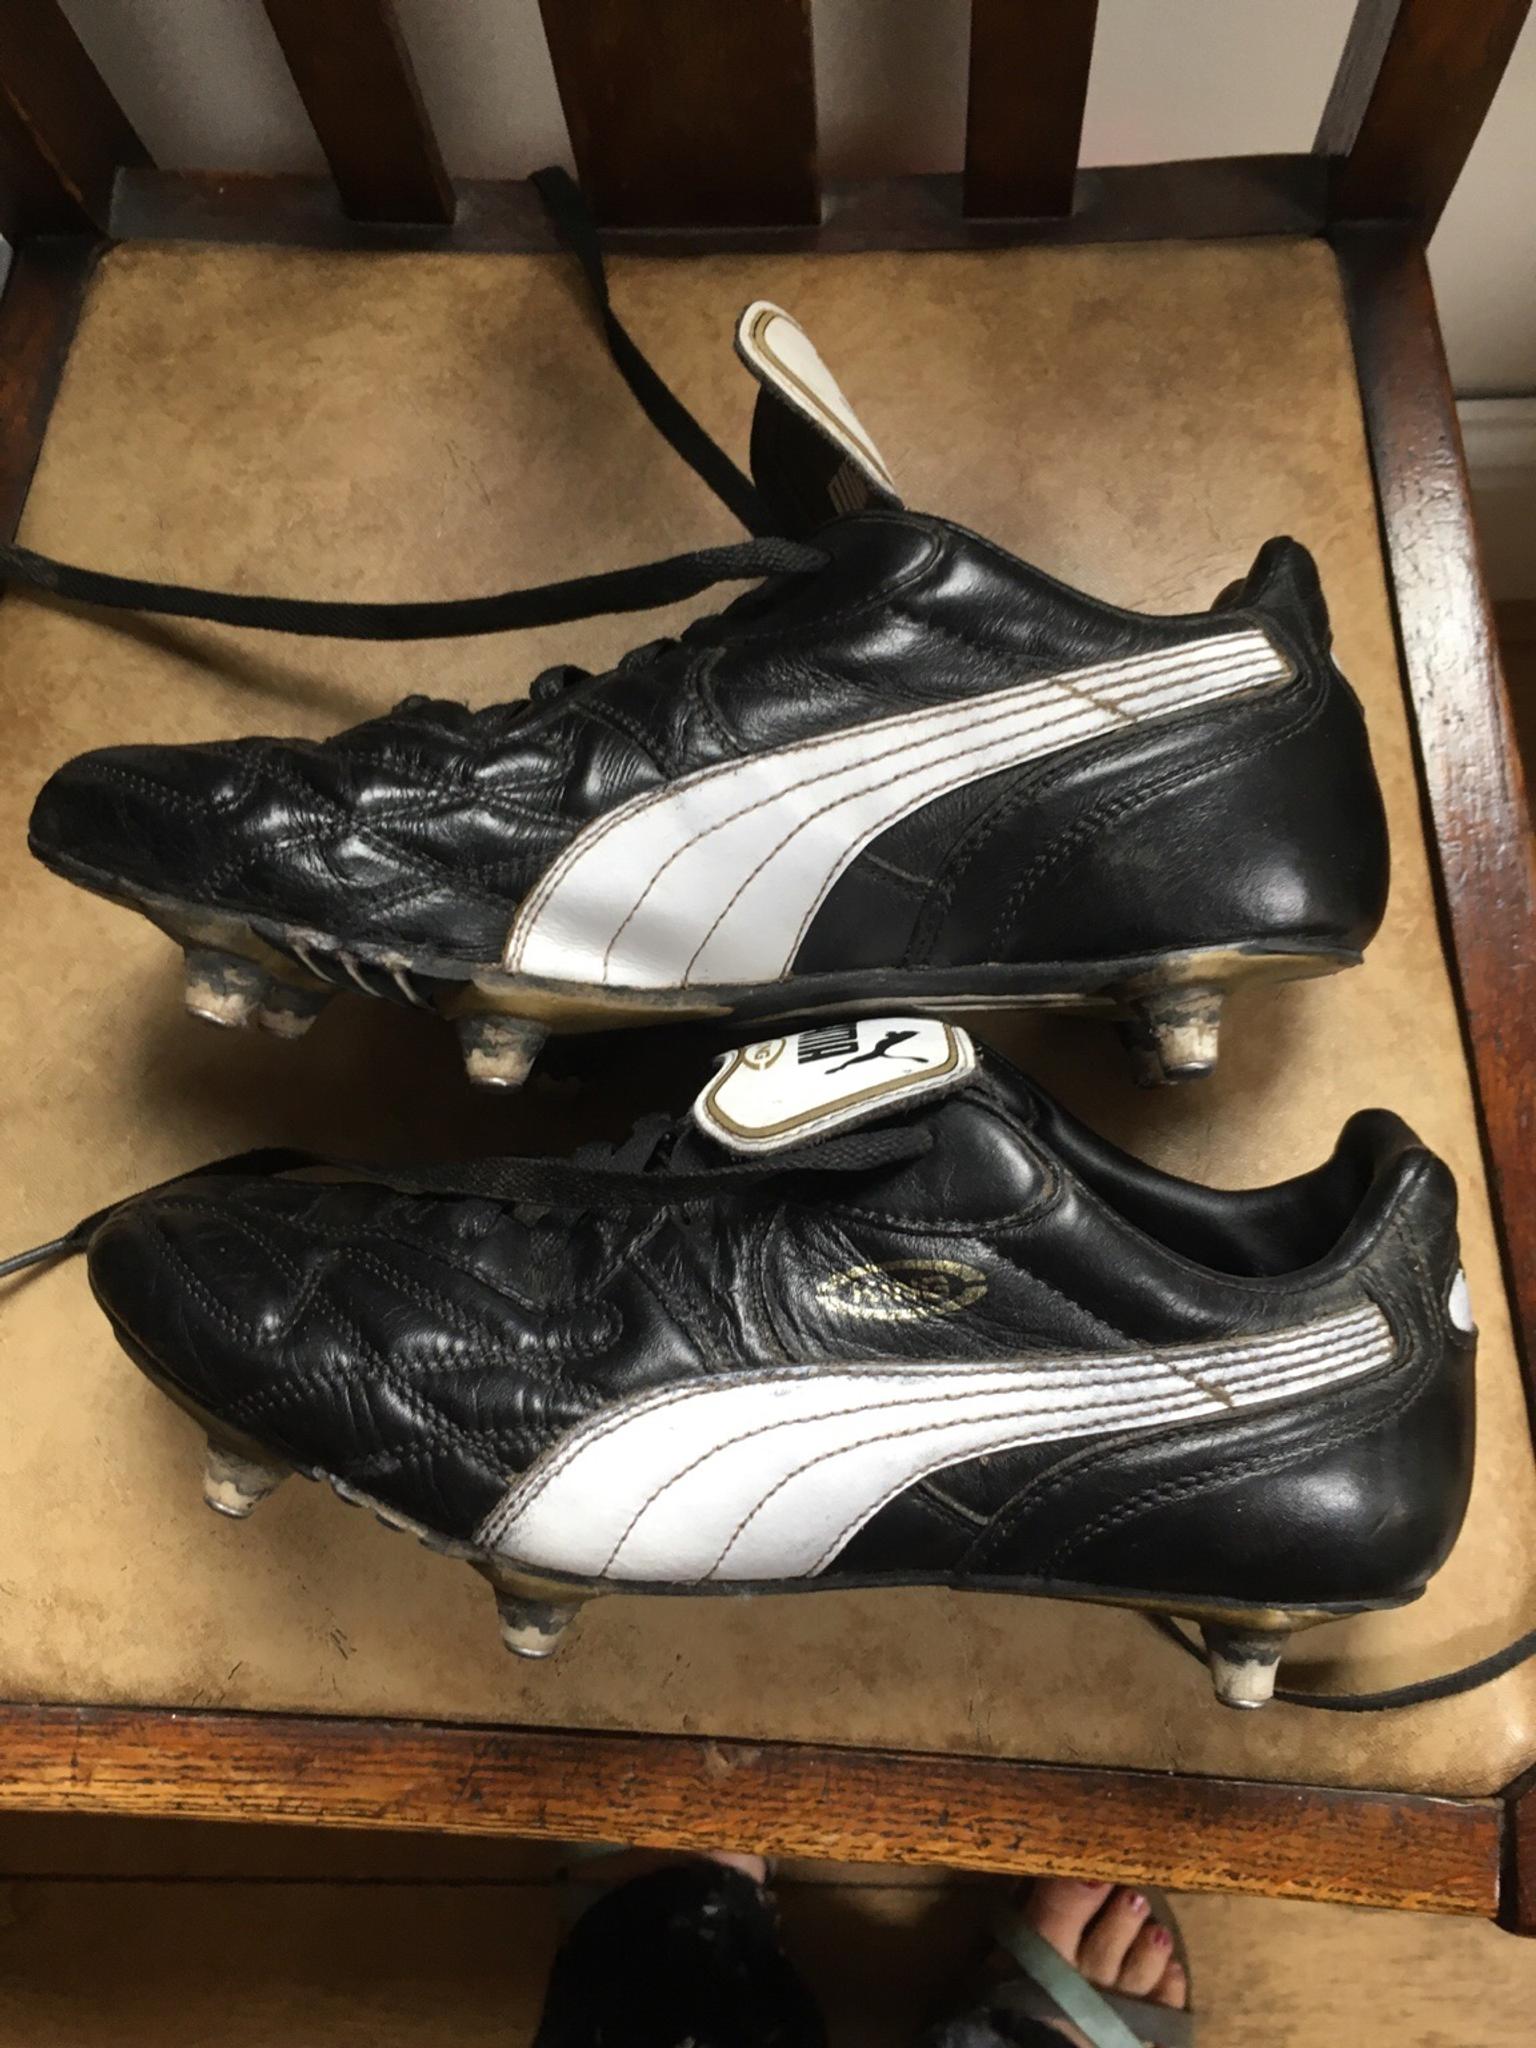 puma football boots size 7.5